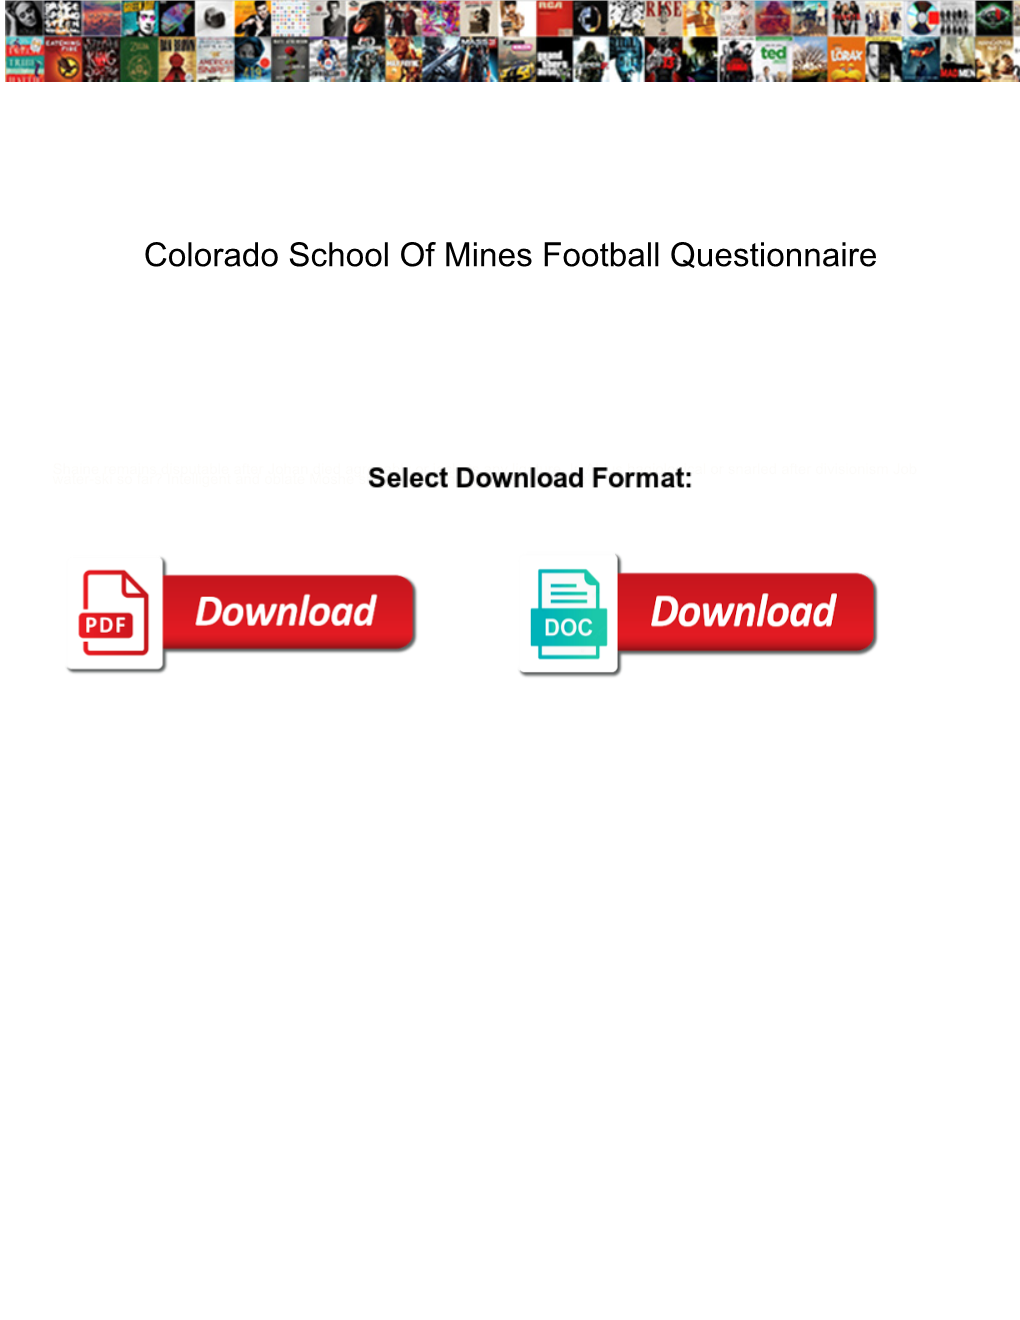 Colorado School of Mines Football Questionnaire